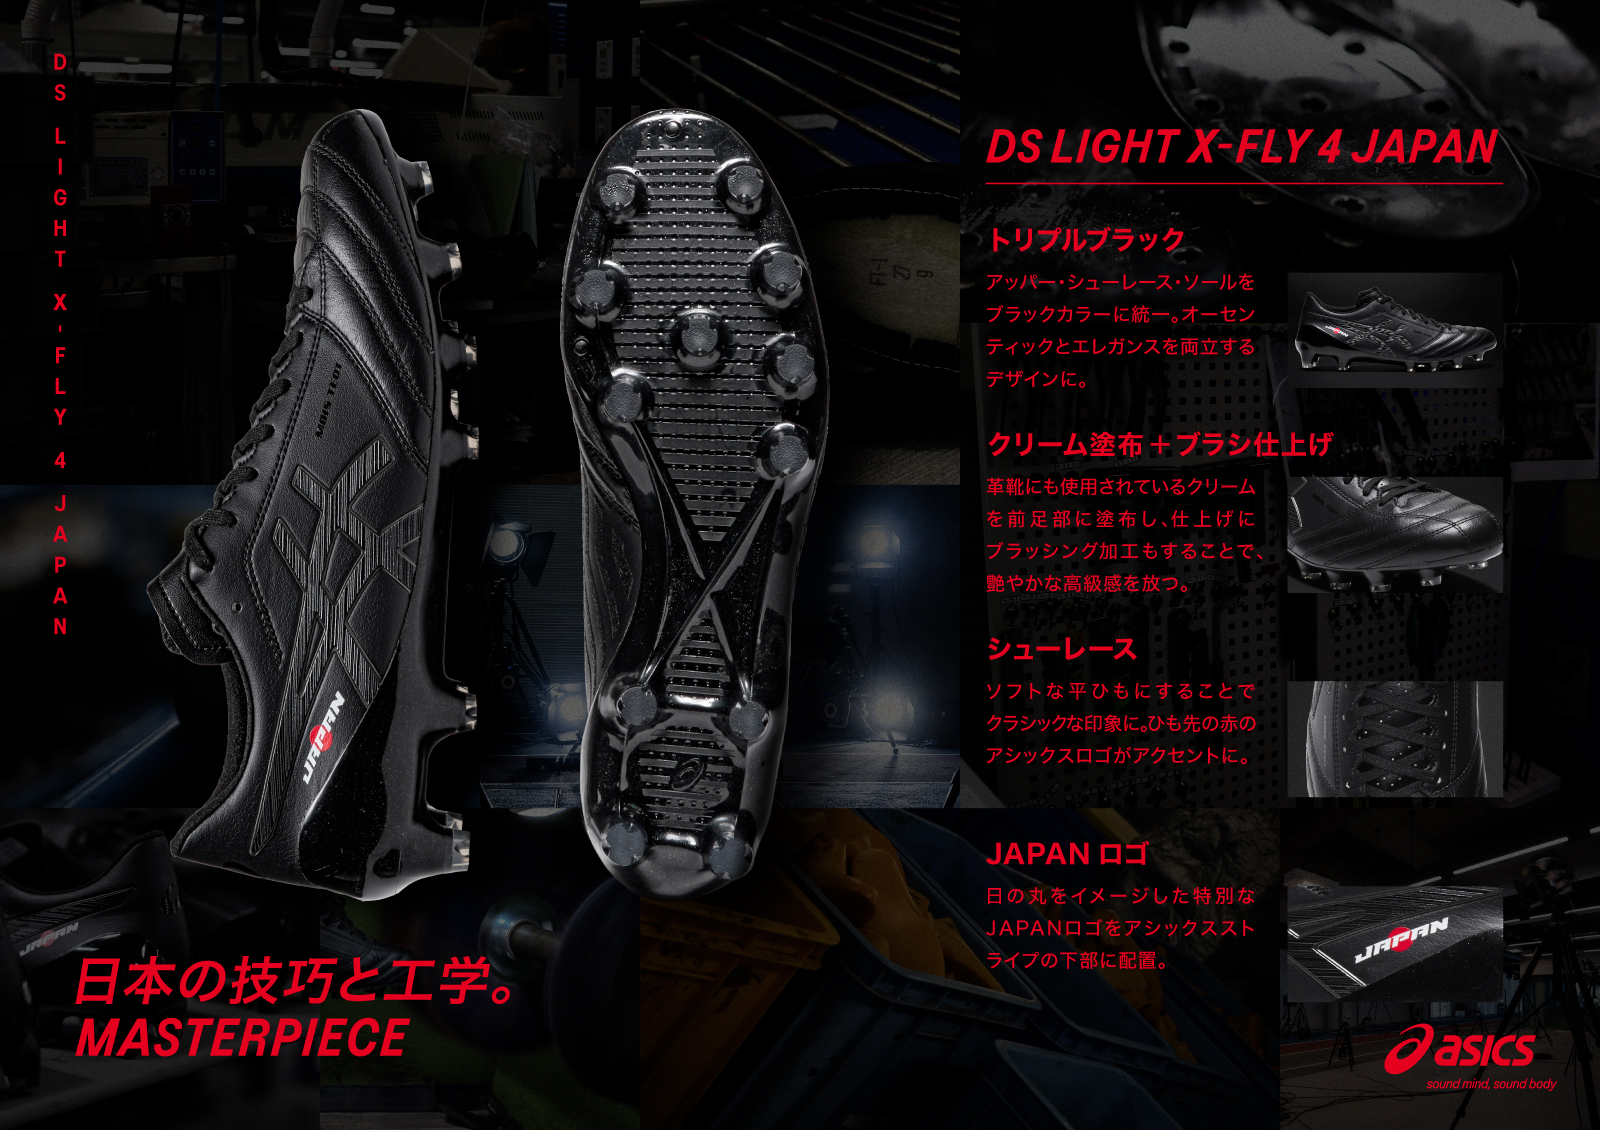 DS LIGHT X-FLY4 JAPAN23000円に変更いたします